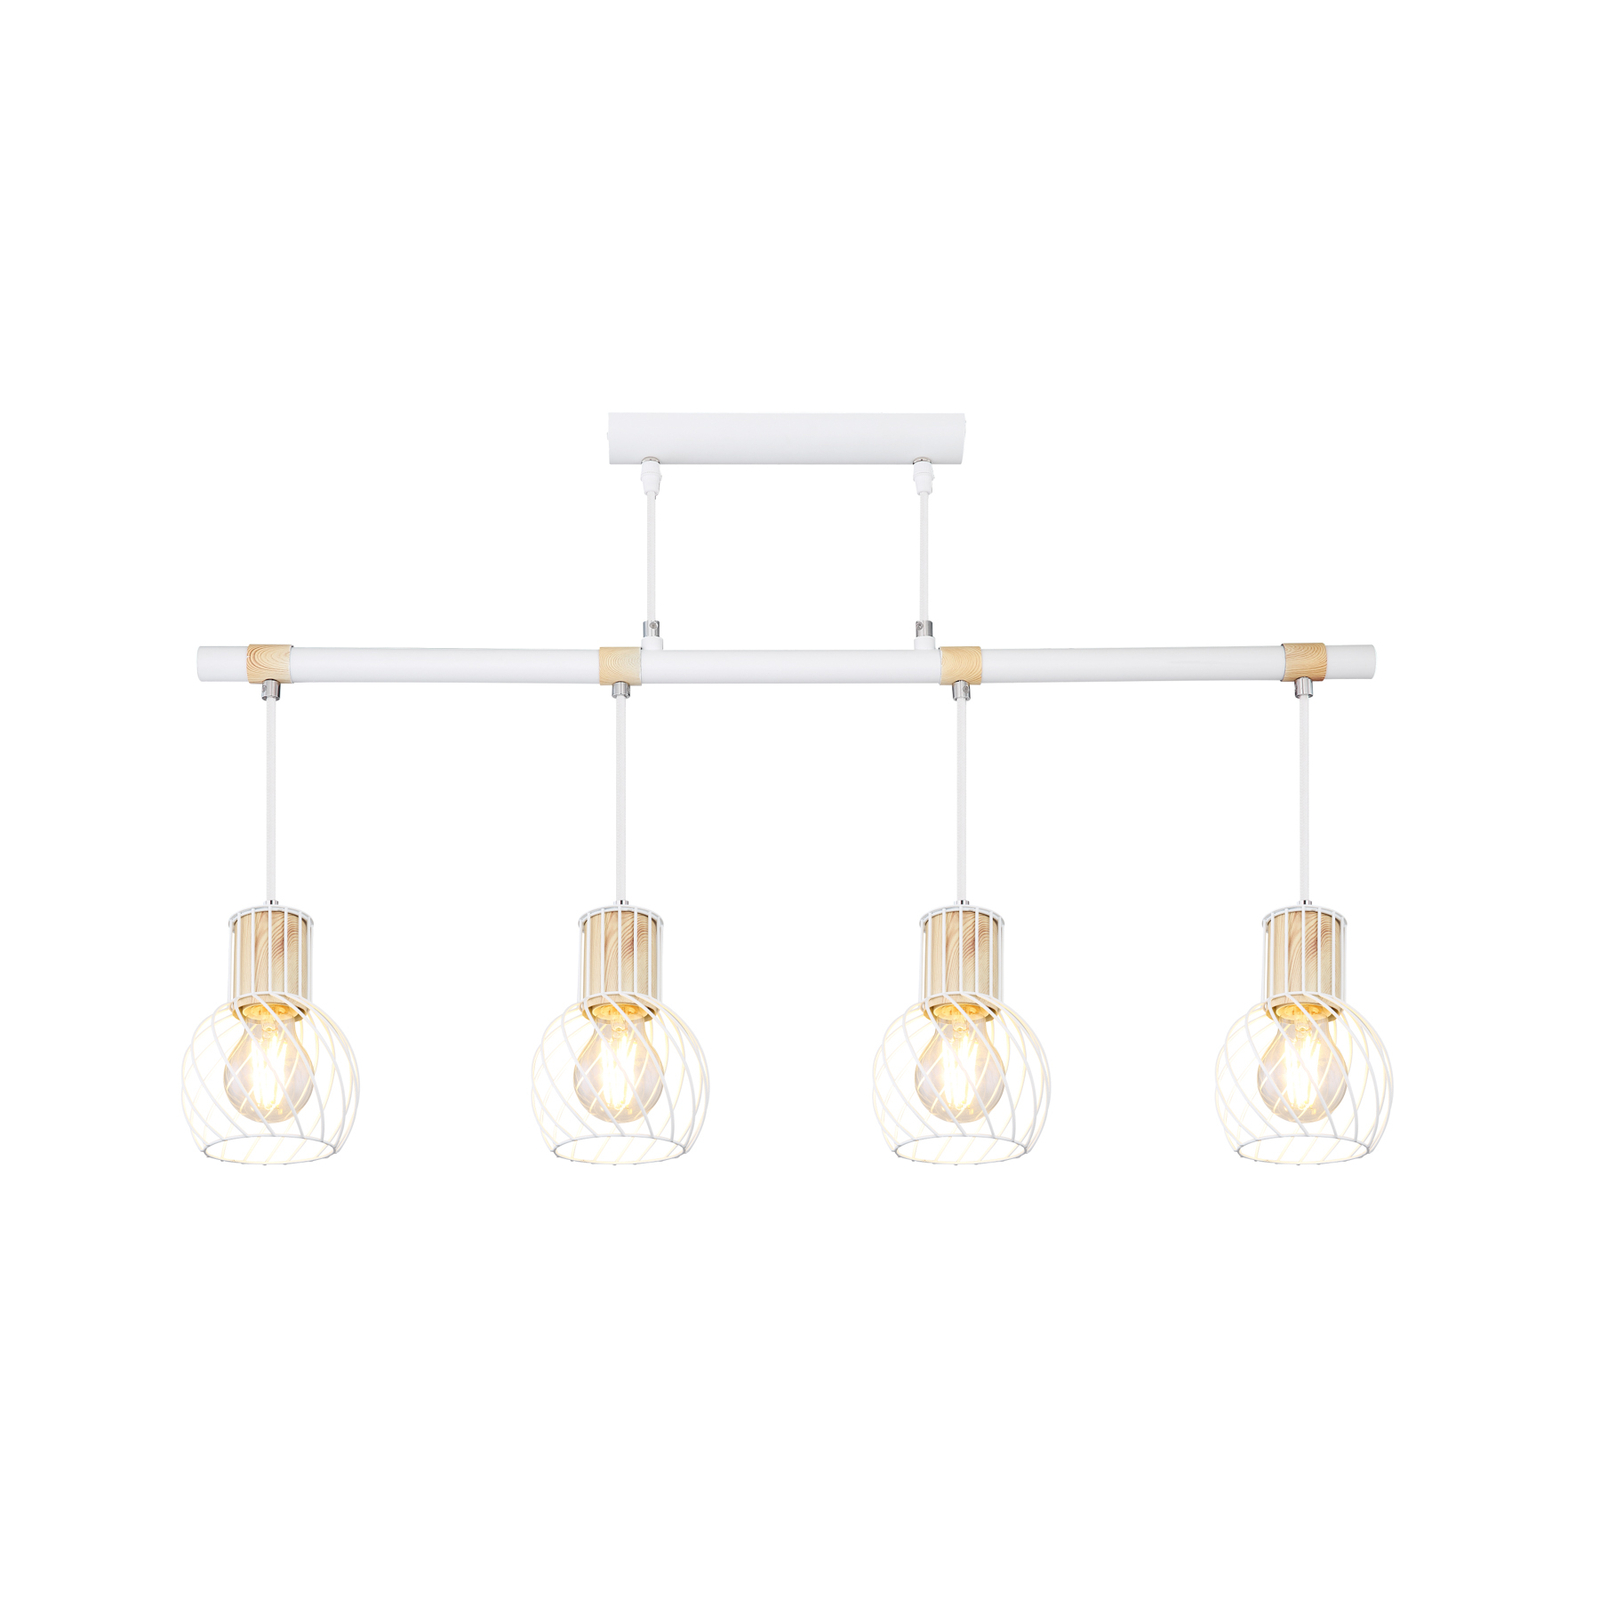 Hanglamp Luise in wit en houtoptiek, 4-lamps